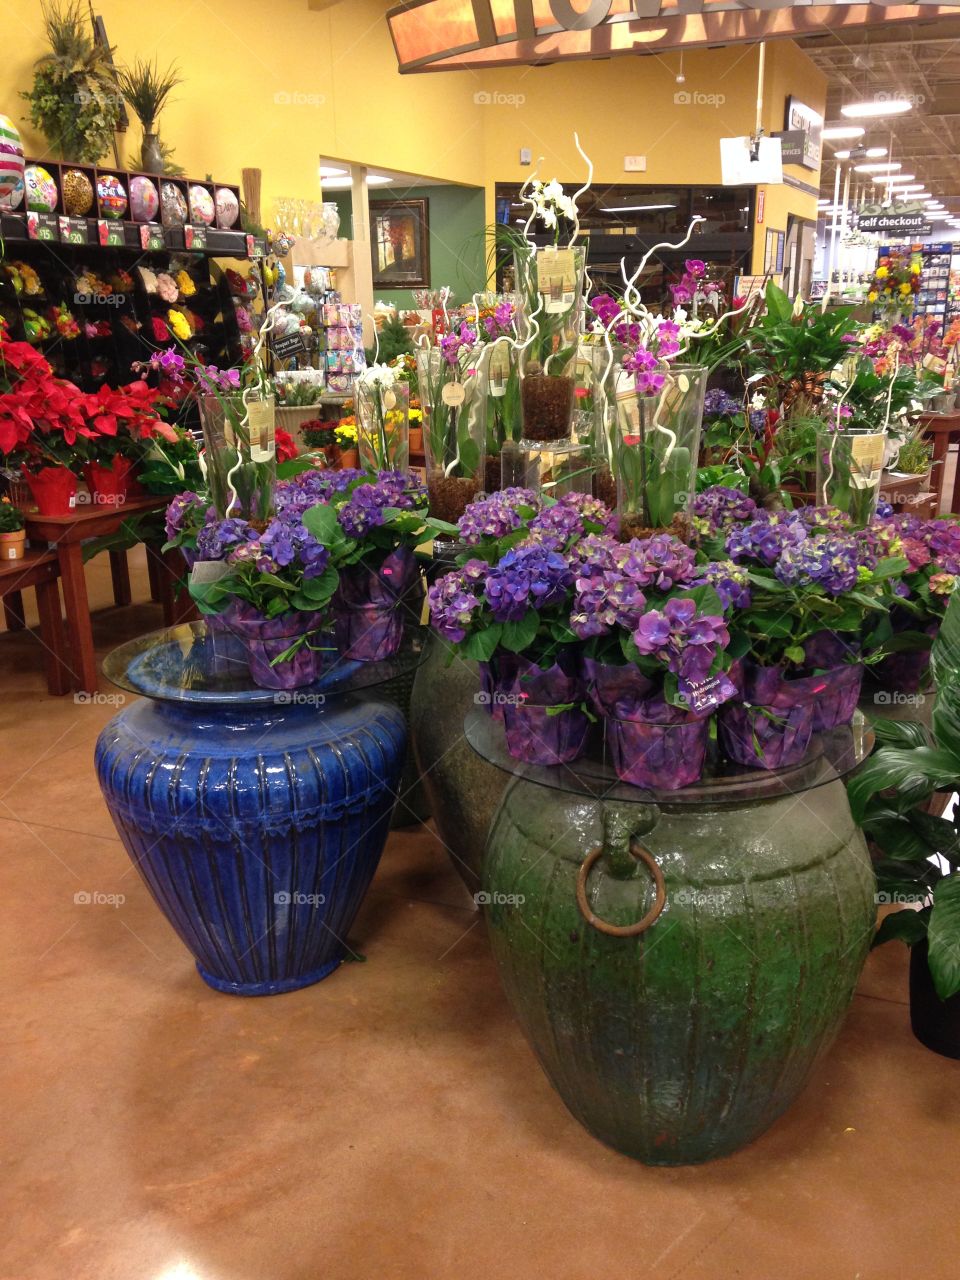 Big ol flower vases 